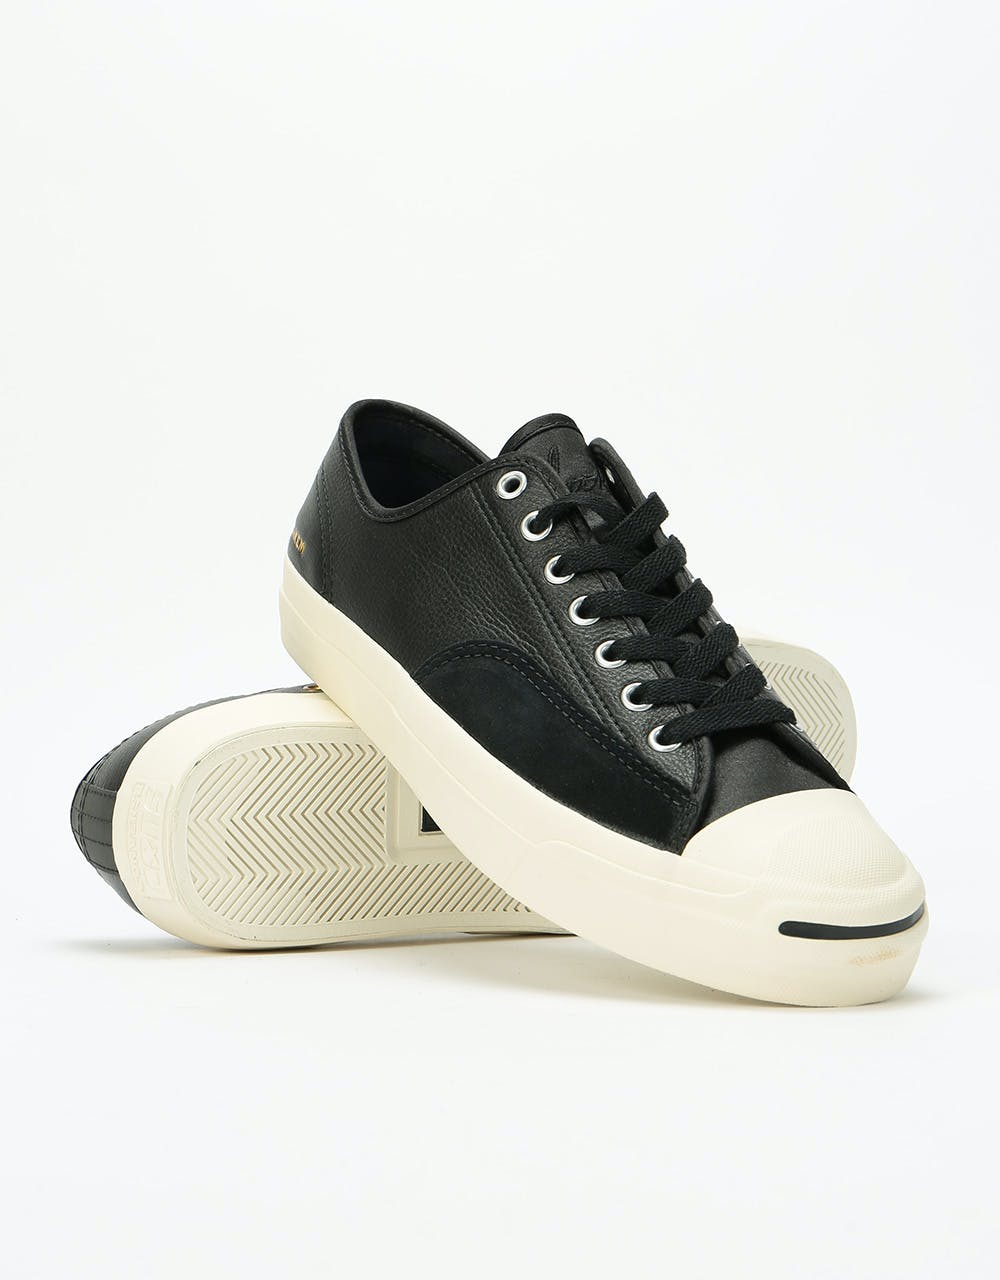 Converse x Jenkem Jack Purcell Pro Ox Skate Shoes - Black/Egret/Black